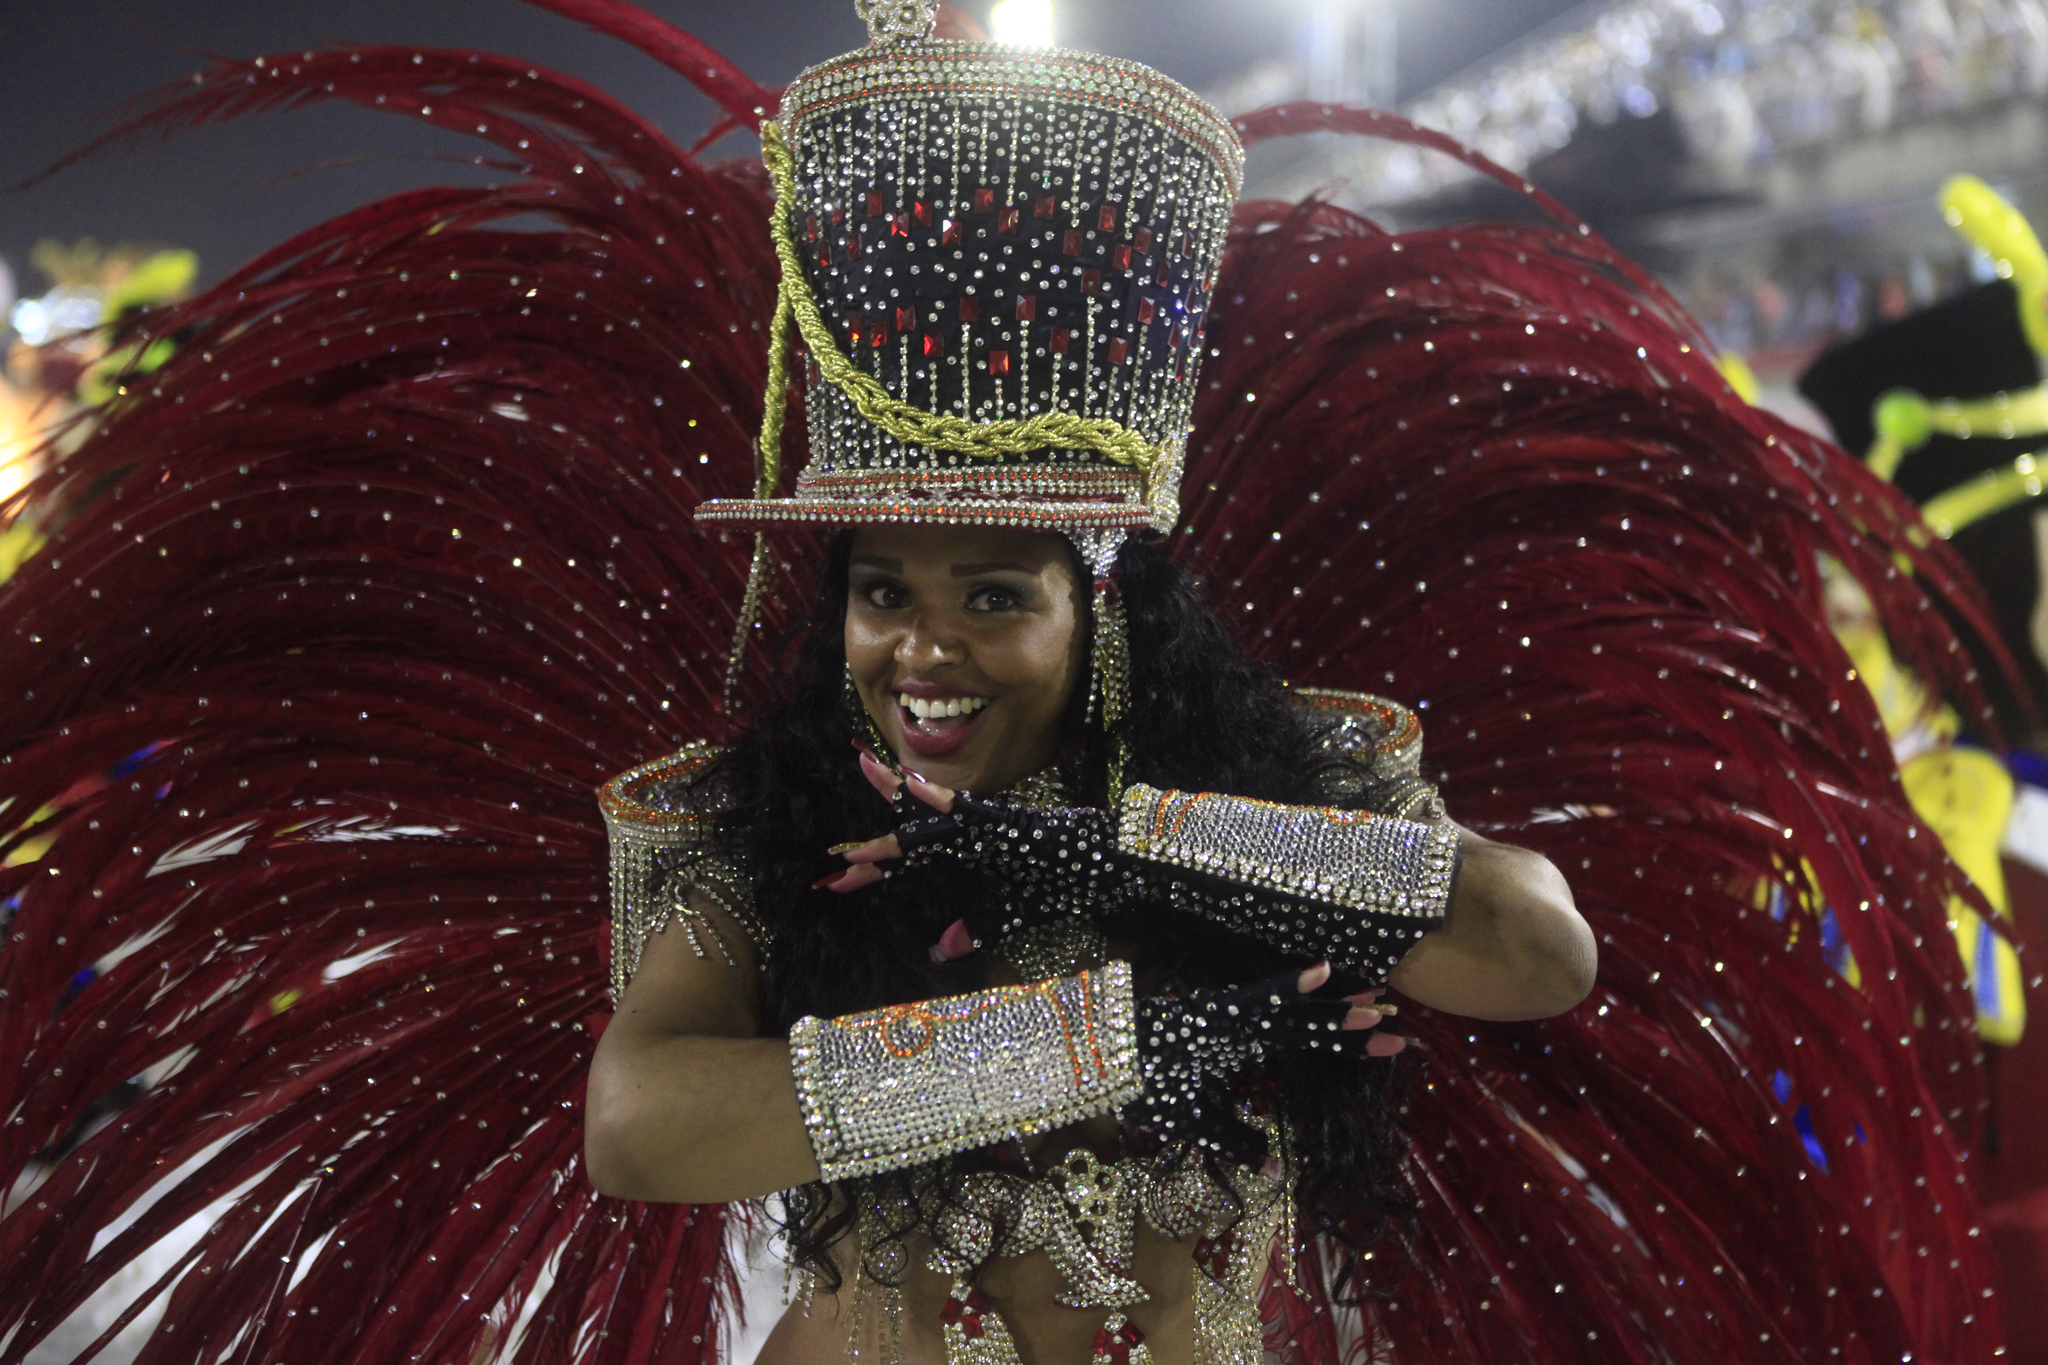 União da Ilha Samba School Parades at Rio Carnival Feb 16th